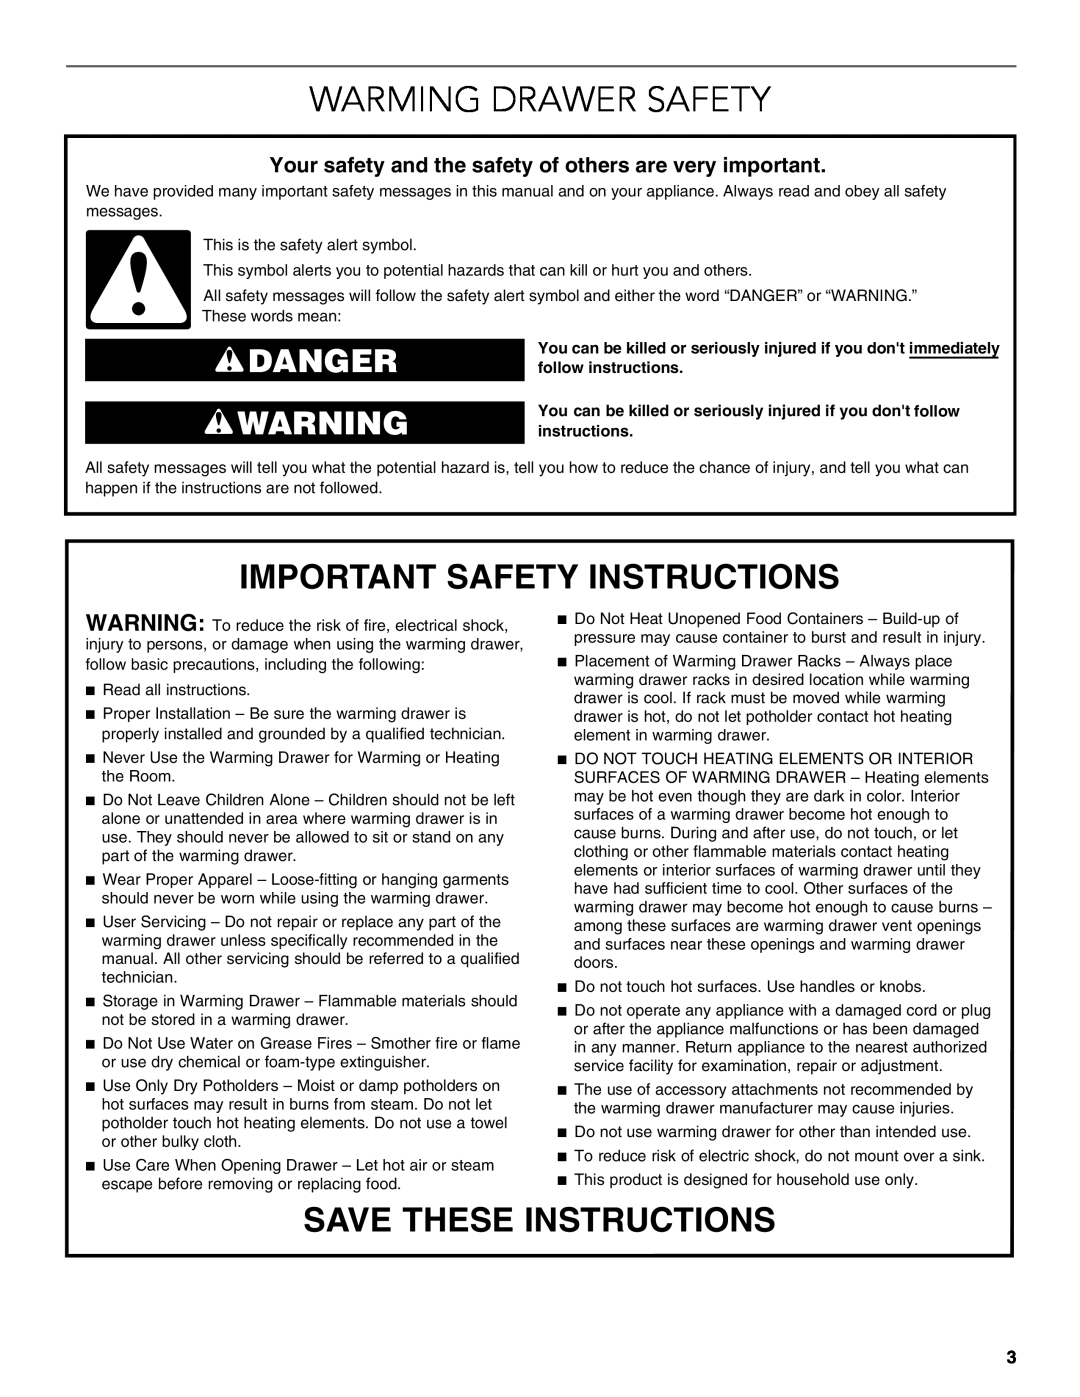 KitchenAid KEWS175, KEWS145, KEWS105 Warming Drawer Safety, Important Safety Instructions, Save These Instructions, Danger 